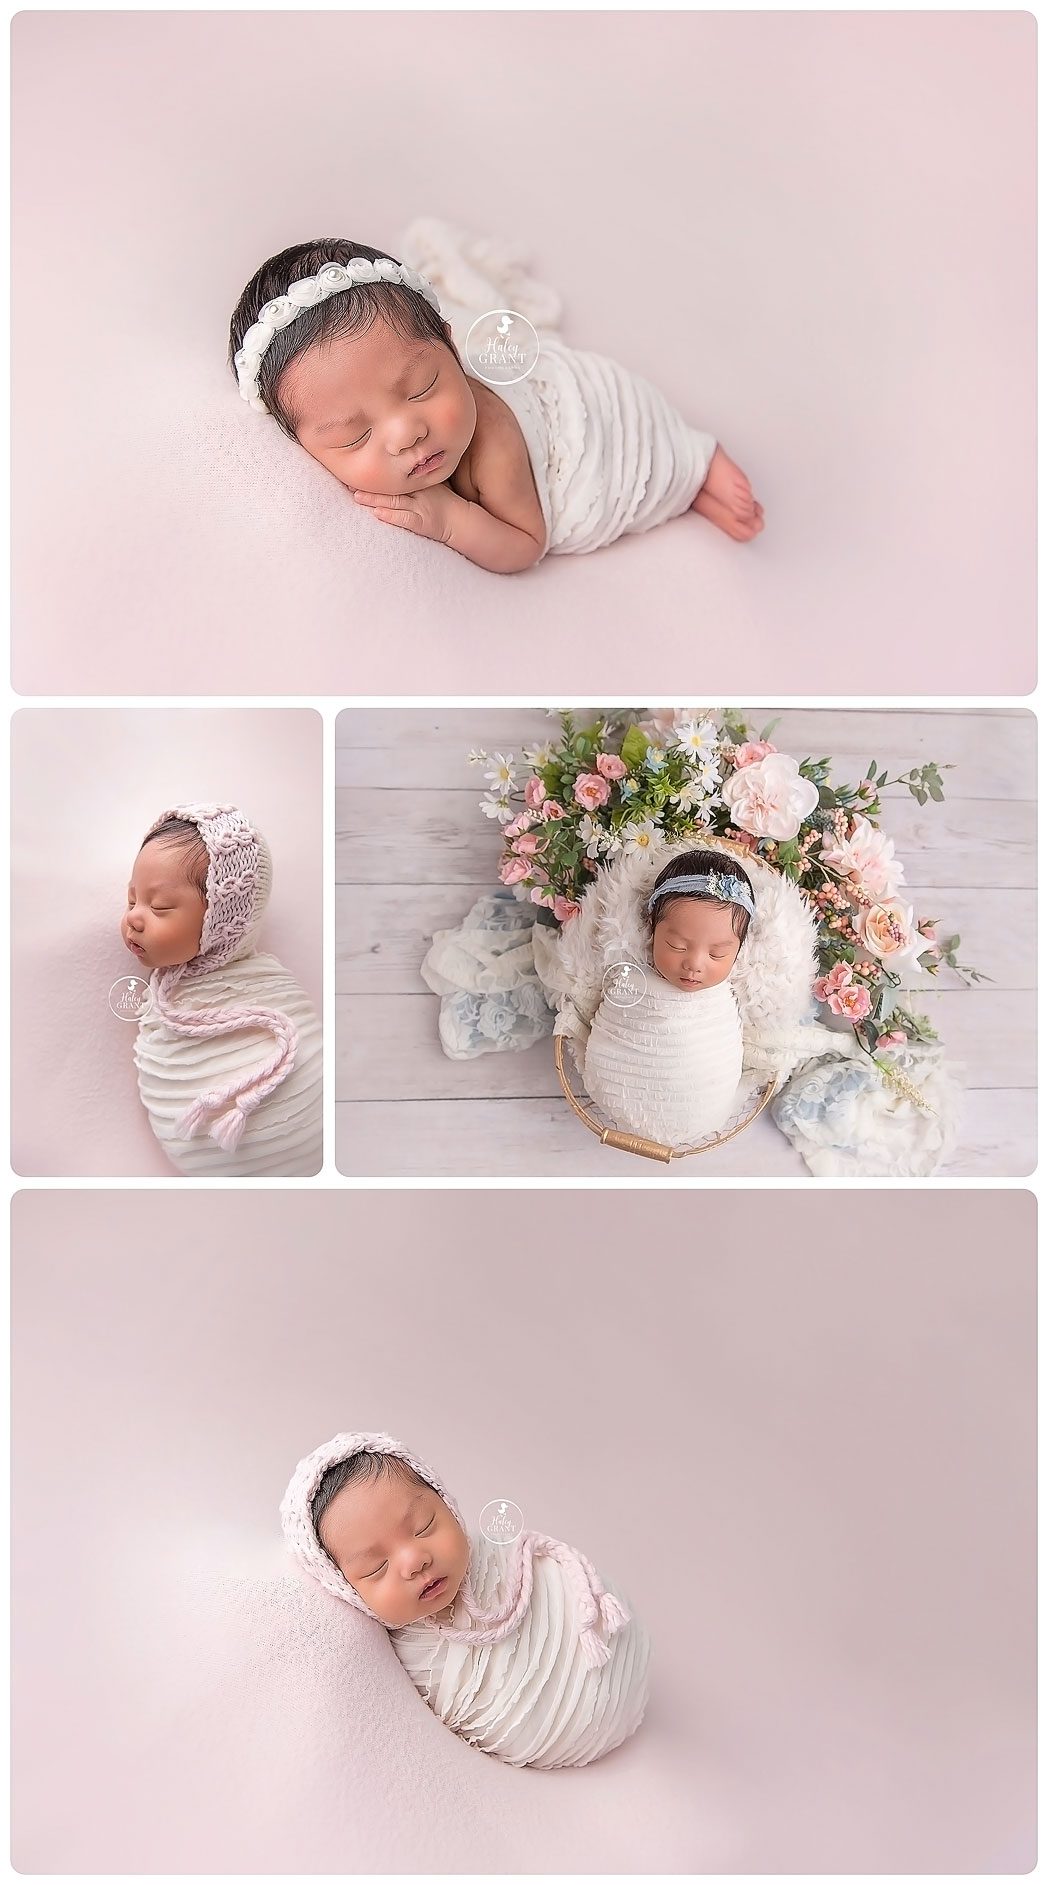 Newborn Photographer Austin - Professional Baby Photos